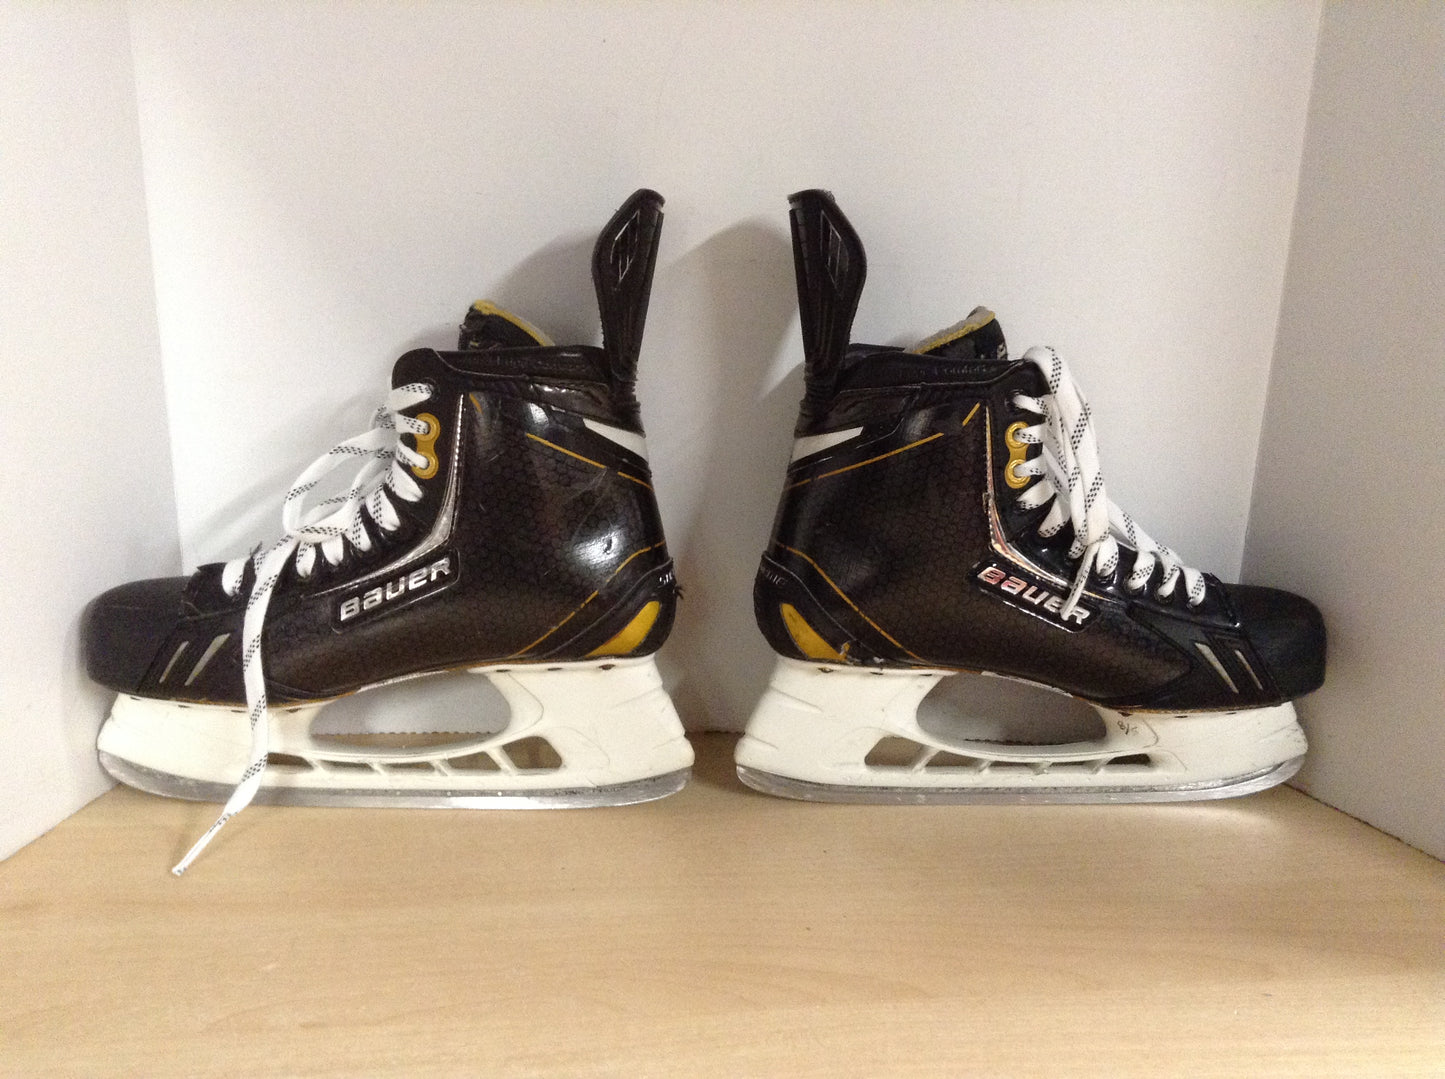 Hockey Skates Men's Size 12 Shoe Size Bauer Supreme Total One NXG Minor Wear